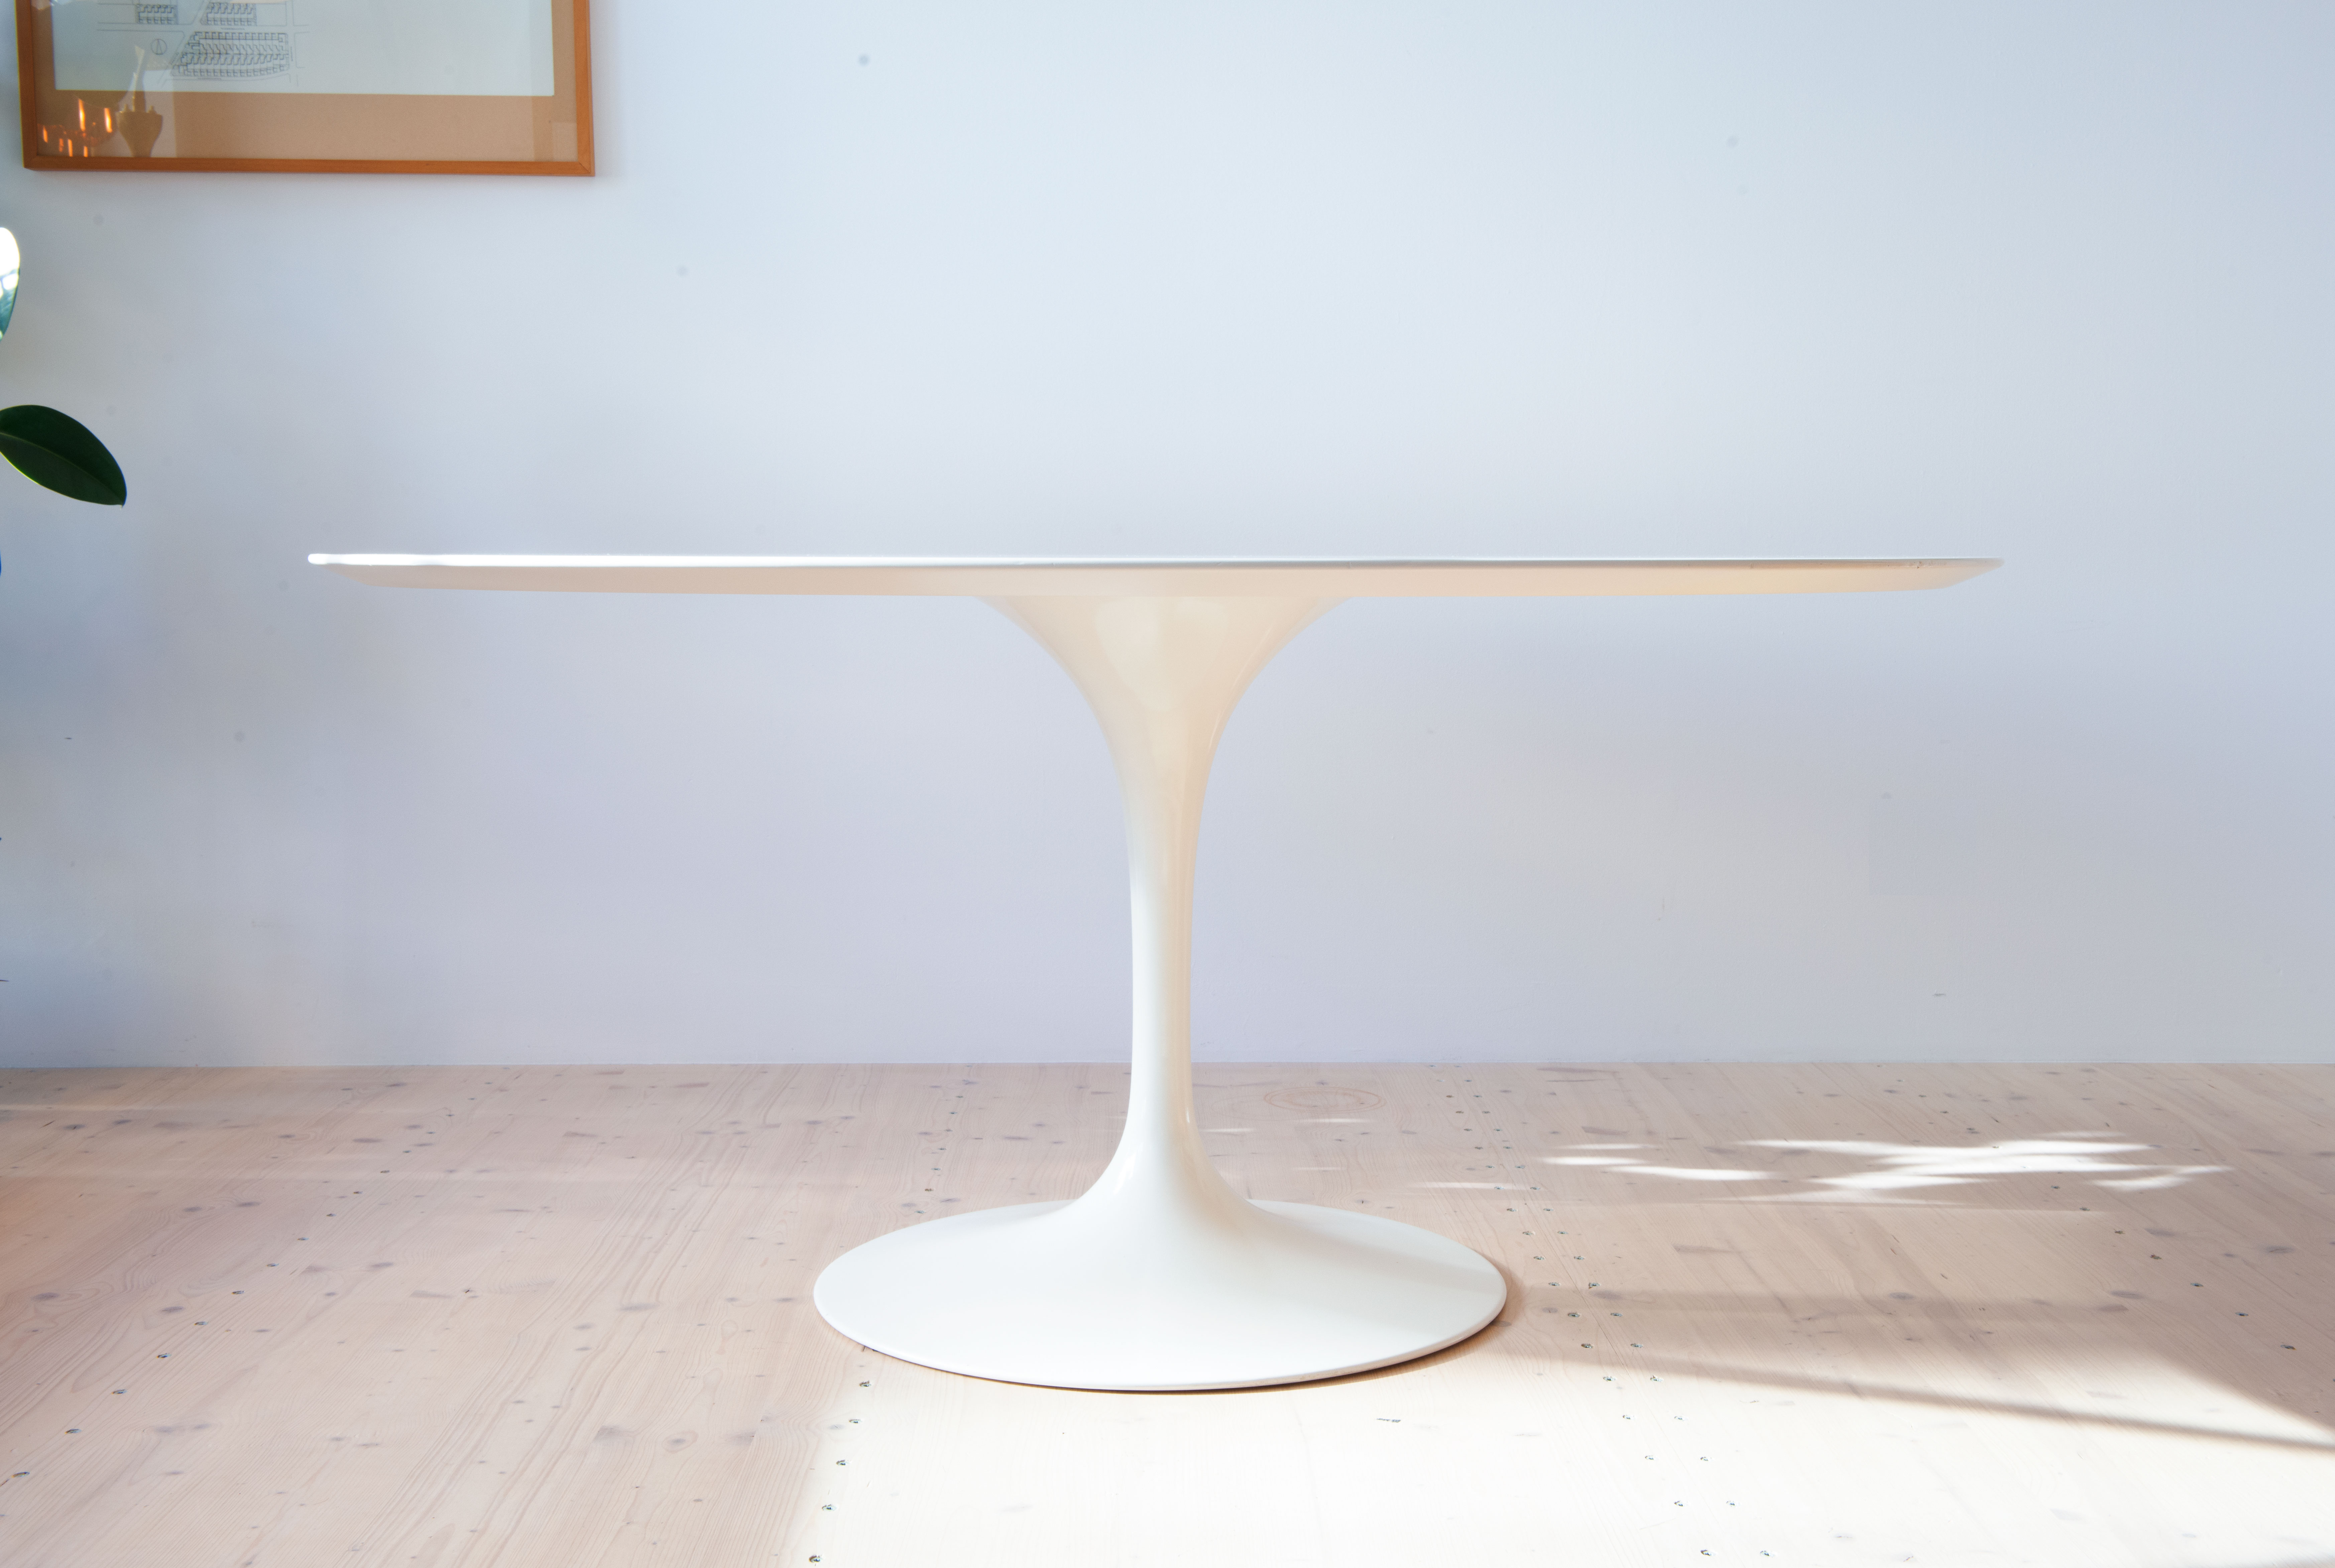 Large Tulip Table by Eero Saarinen, by Knoll International, 1970s. 152 cm diameter. Available at heyday möbel, Grubenstrasse 19, 8045 Zürich, Switzerland. Mid-Century Modern Furniture and Other Stuff.